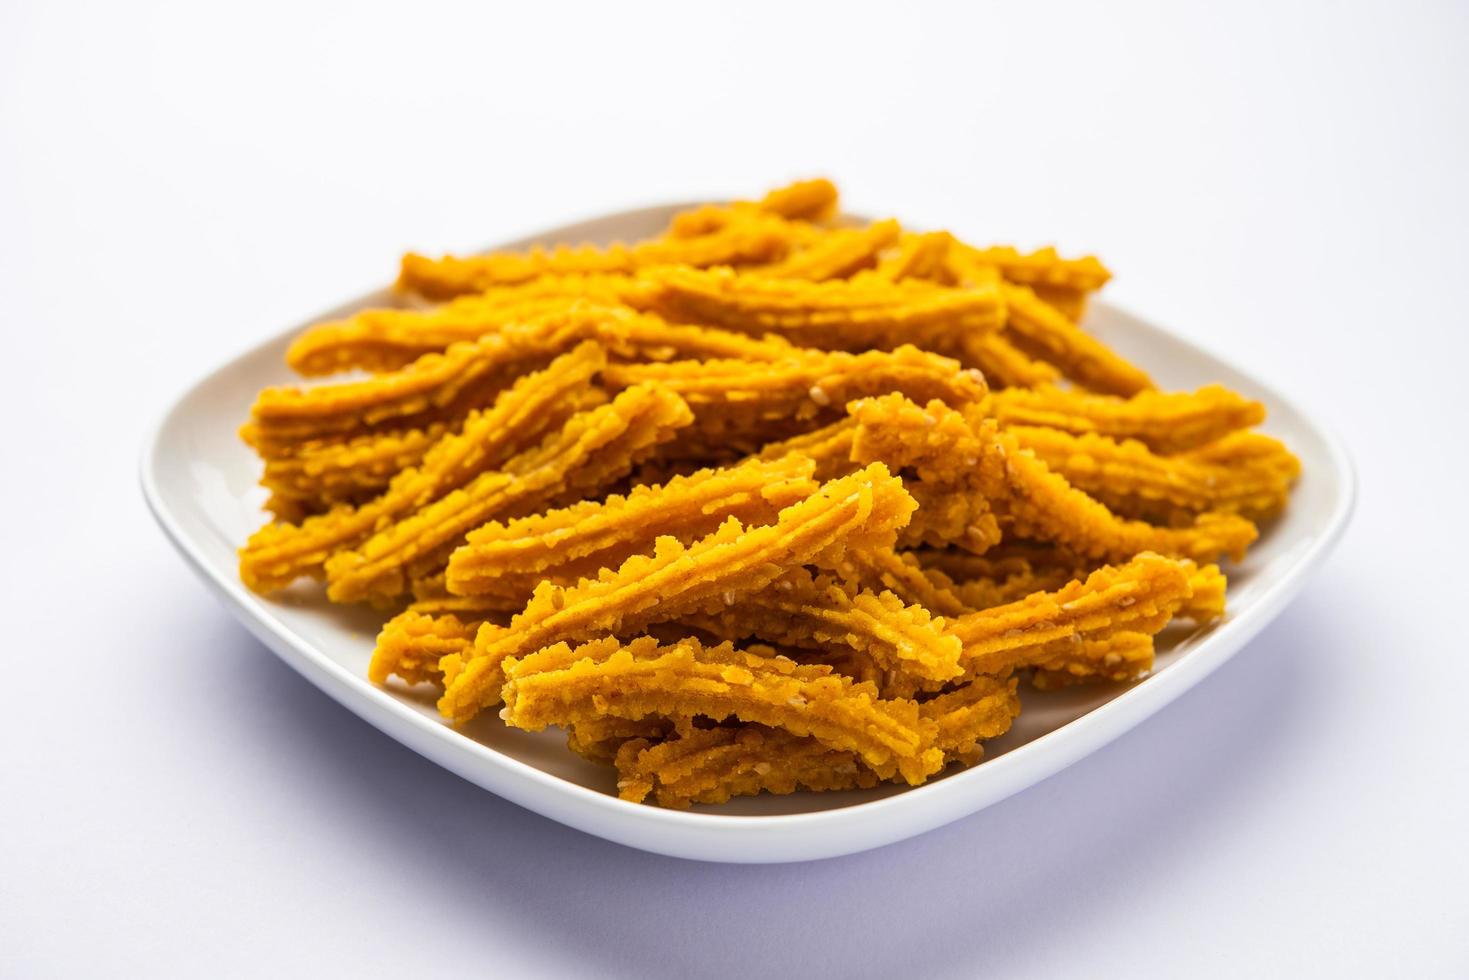 Bhajni chakli sticks or crunchy murukku snack made using diwali festival, favourite munching food photo